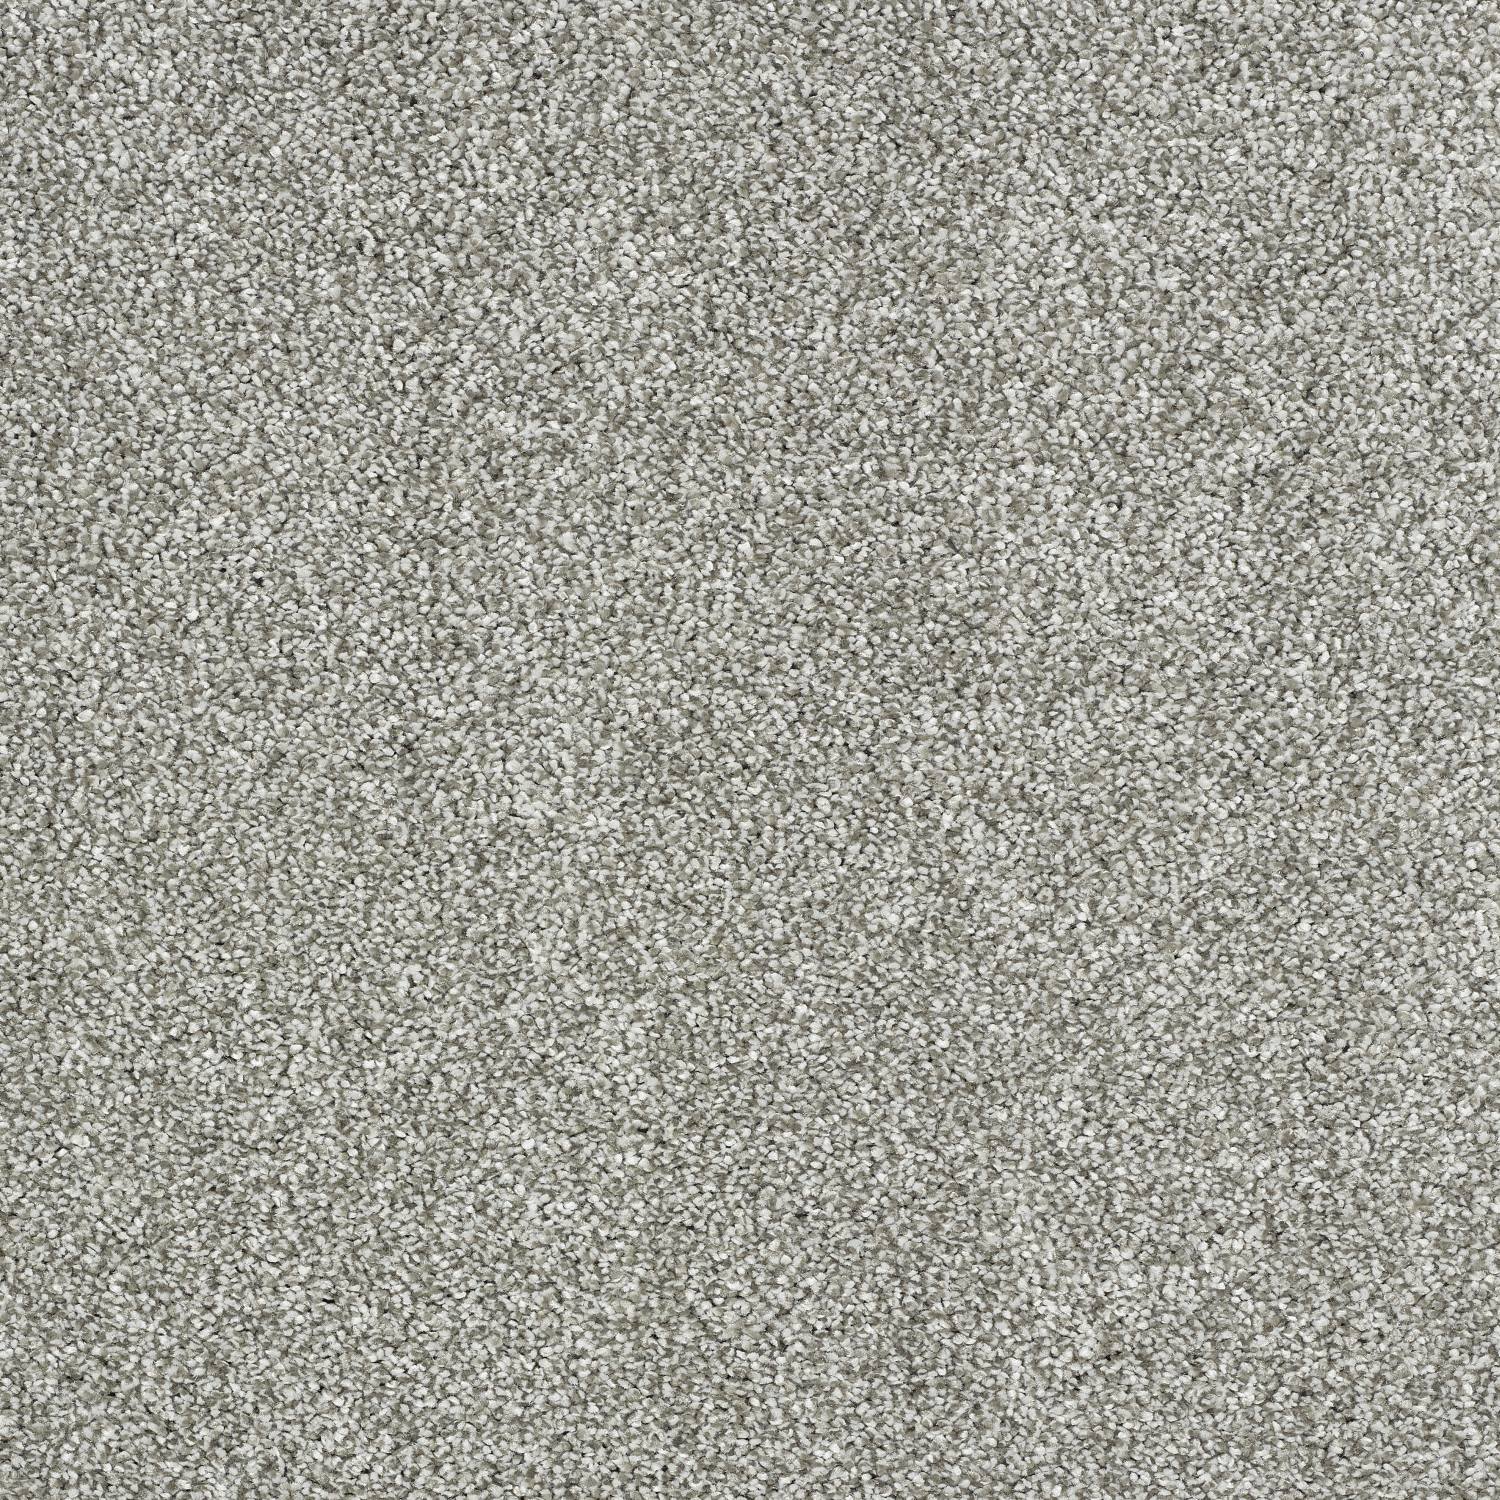 Stainfree Panache Twist Carpet - 05 Dove Grey